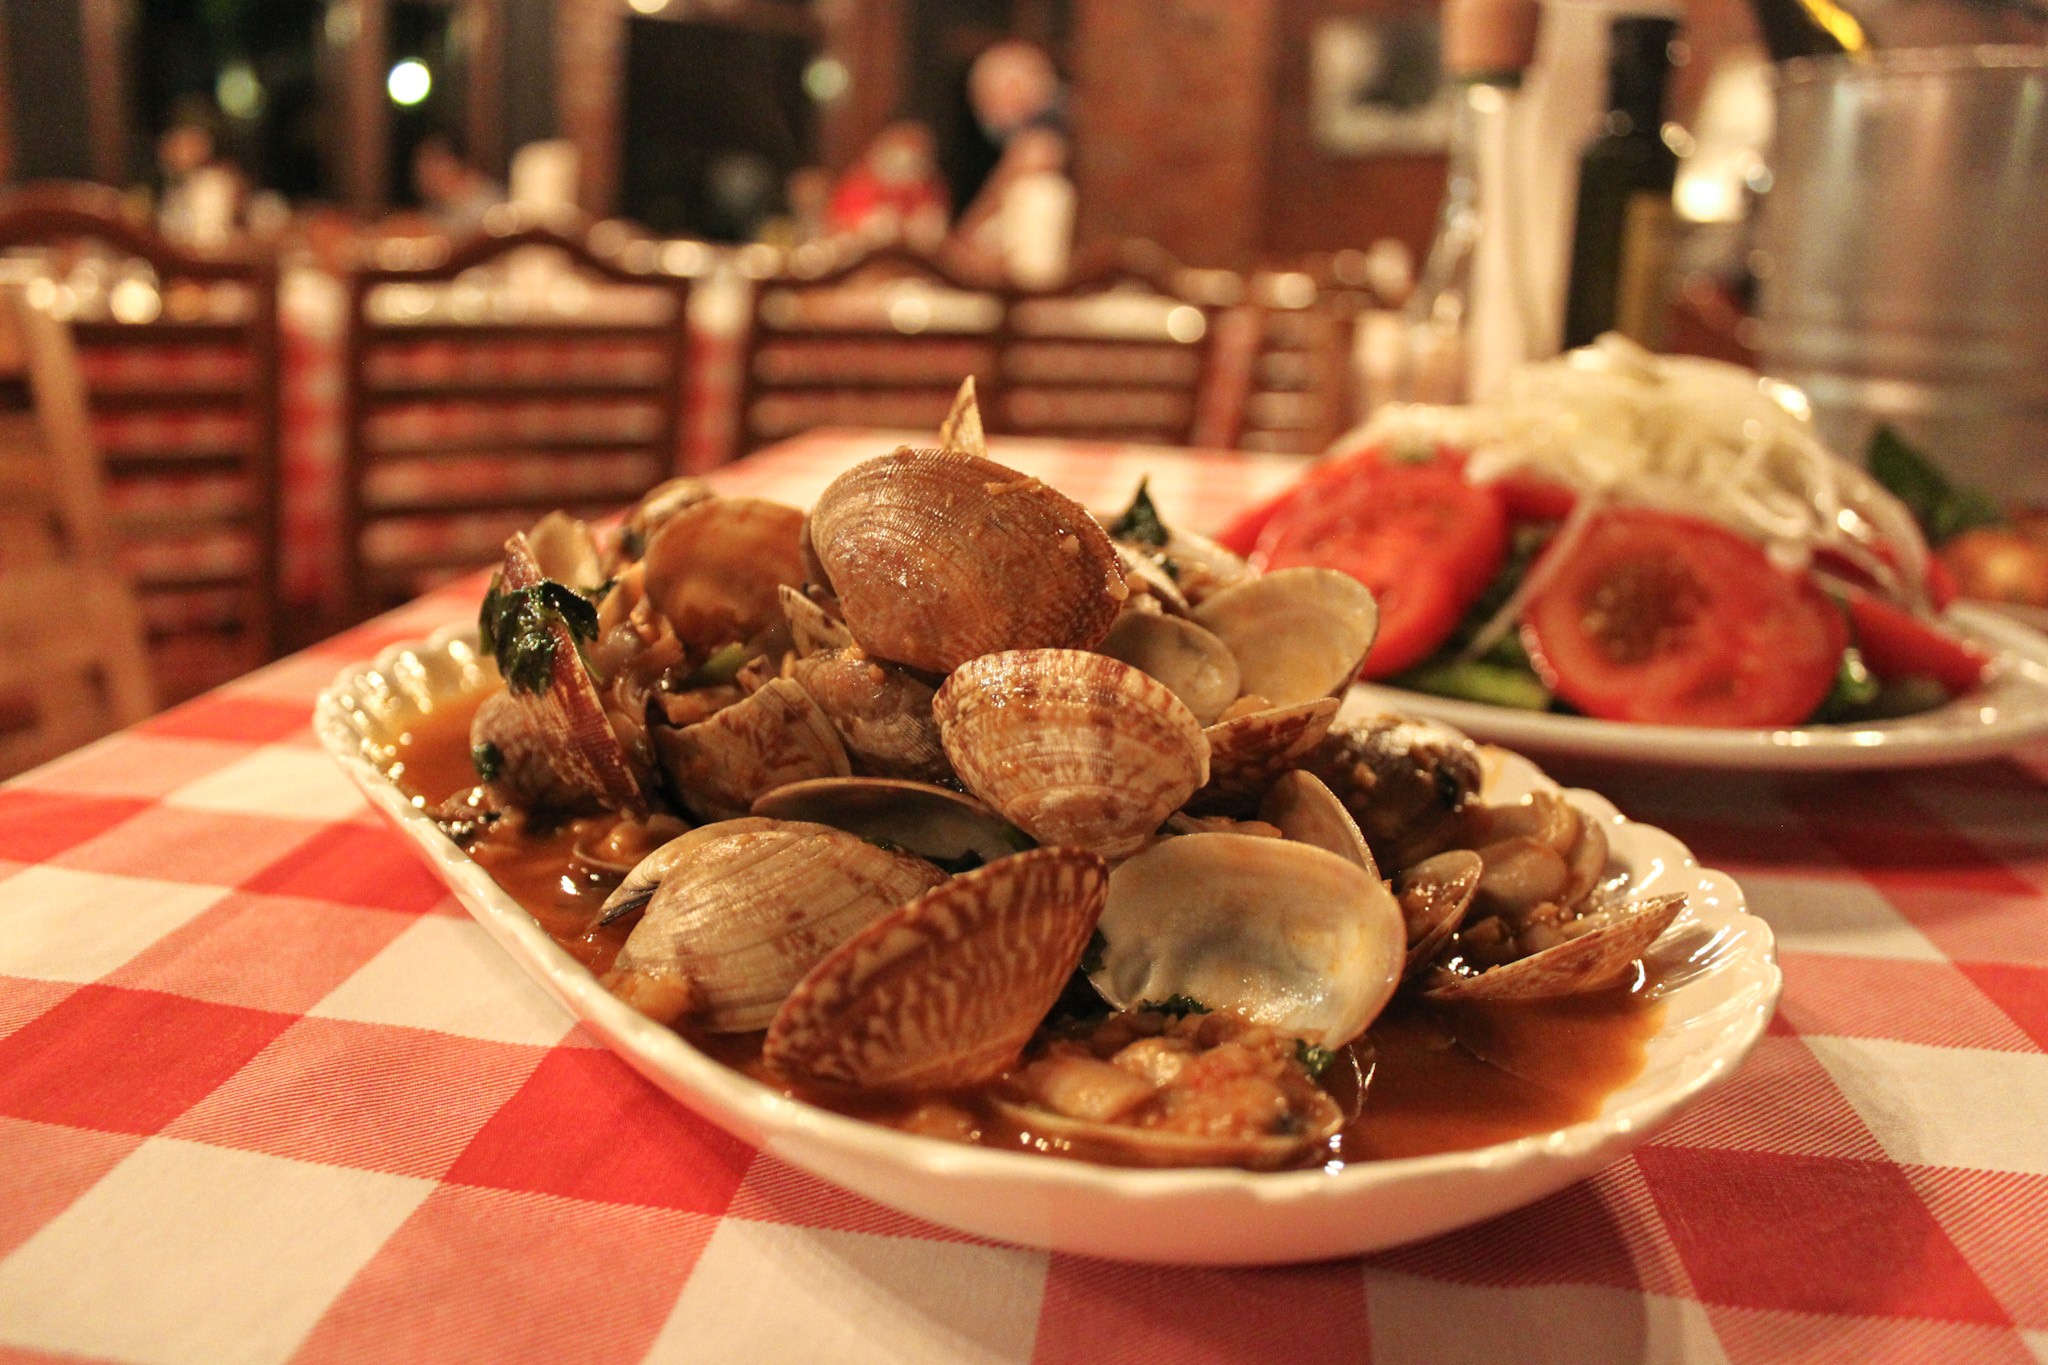 clams fernandos style fernandos restaurant coloane hac-sa beach